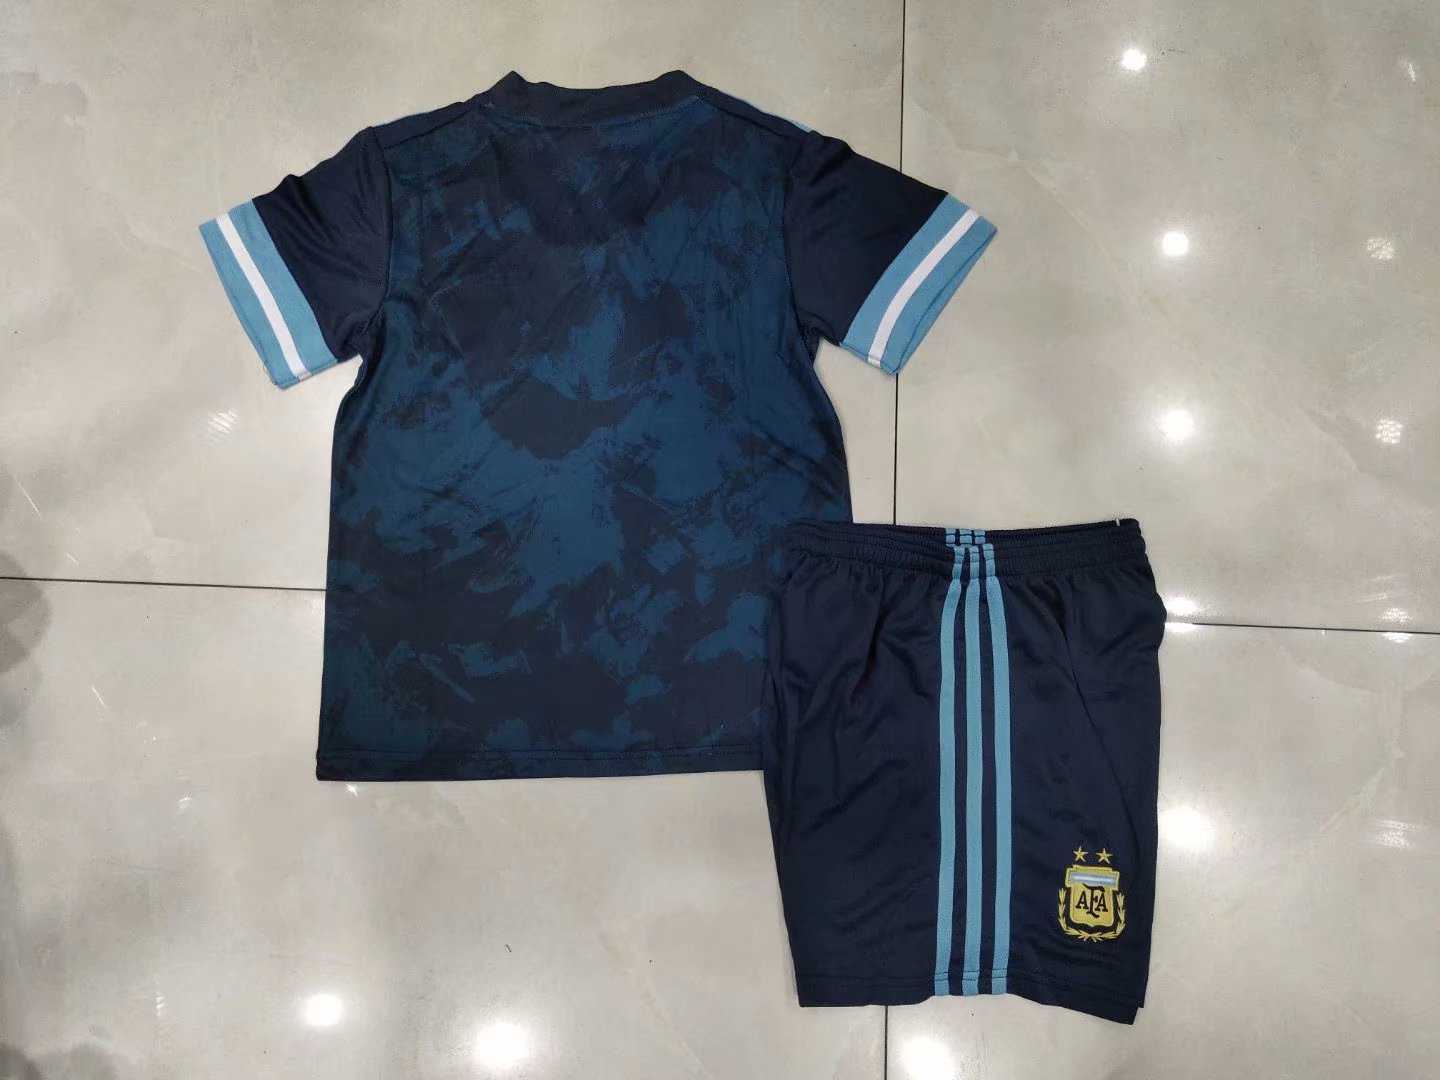 2020 Argentina Away Kids Soccer Kit(Jersey+Shorts)